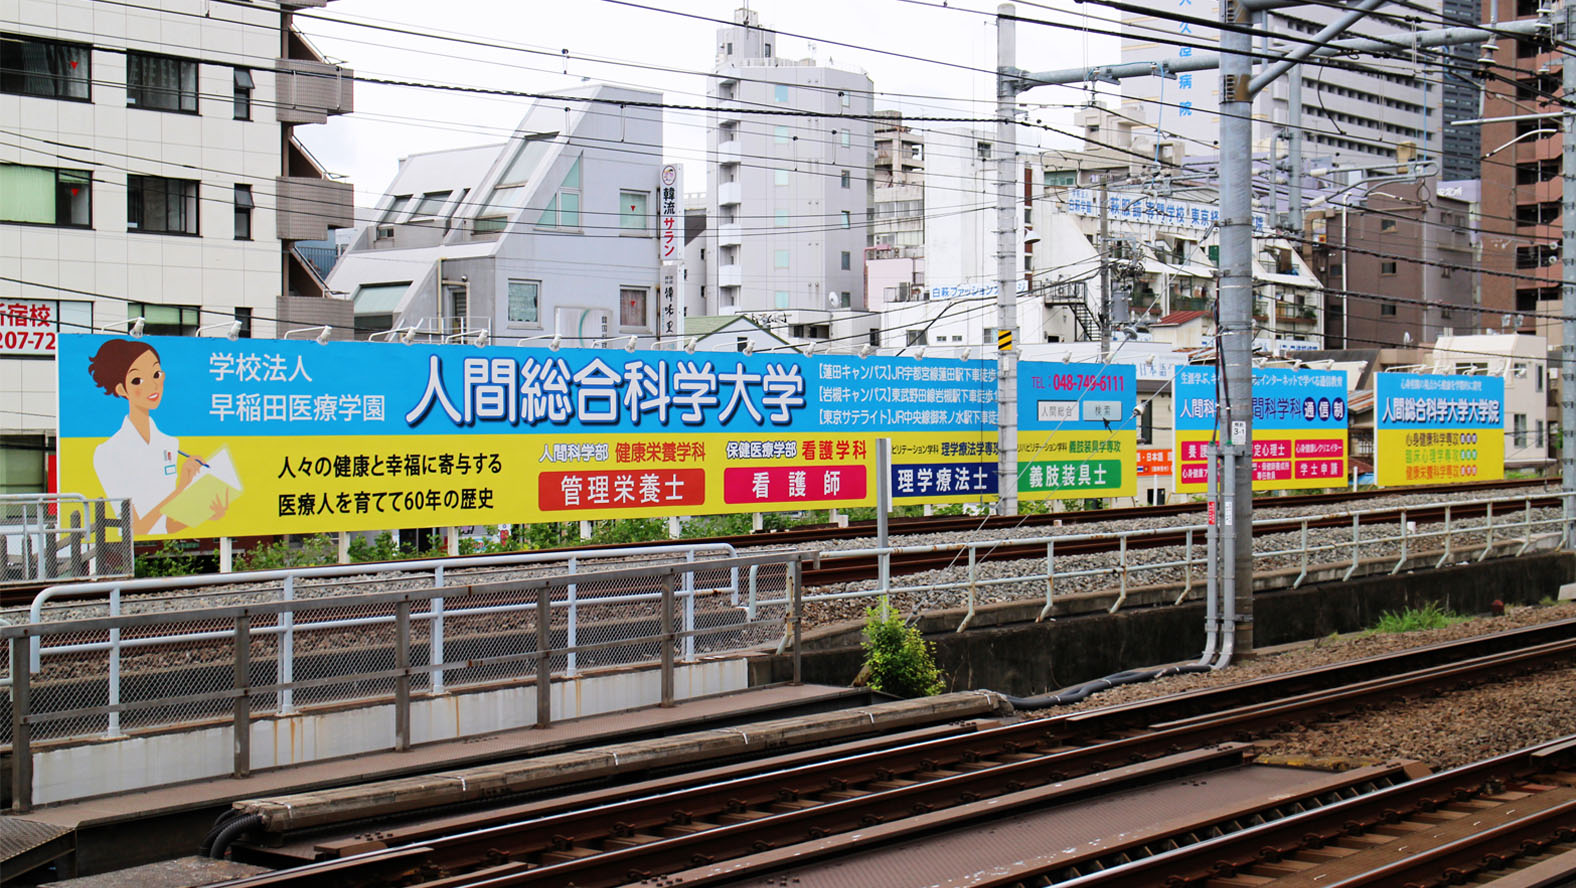 Station advertising